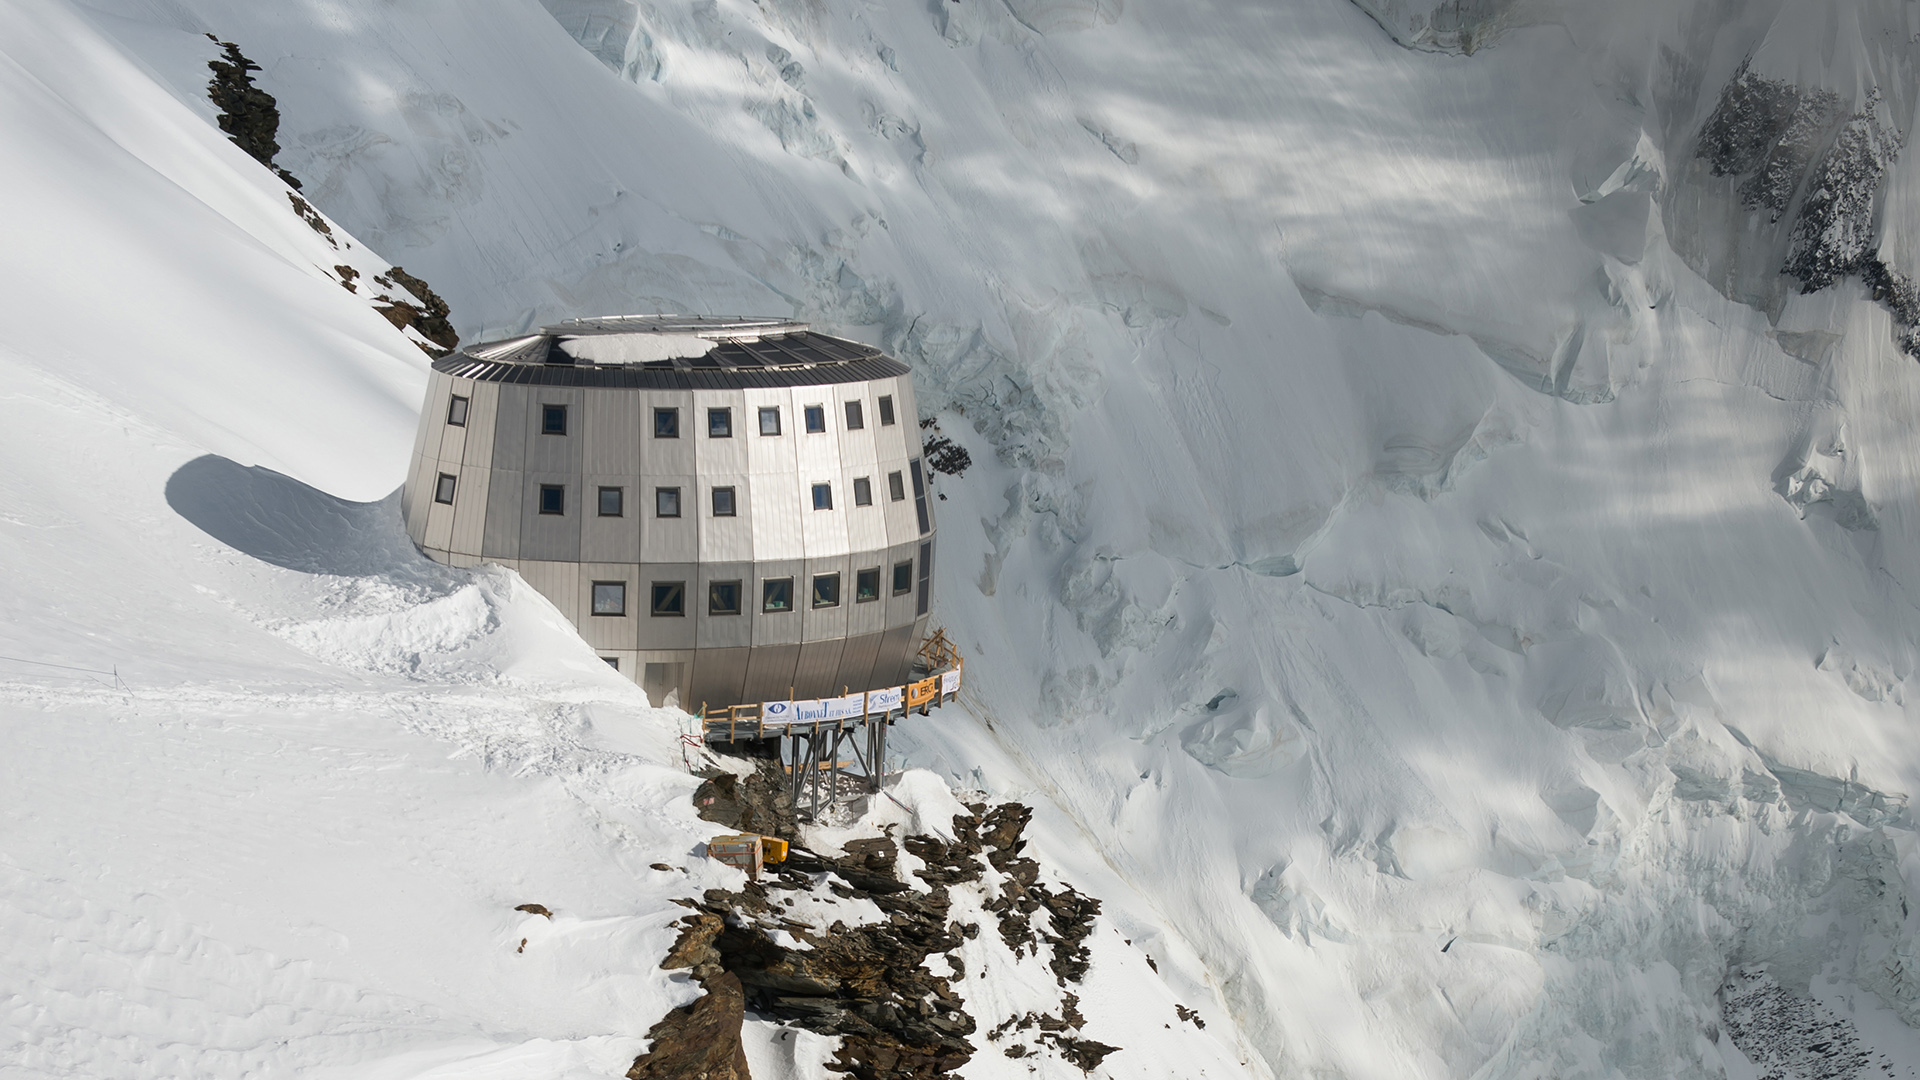 Berghütte Goûter am Mont Blanc | picture alliance / abaca